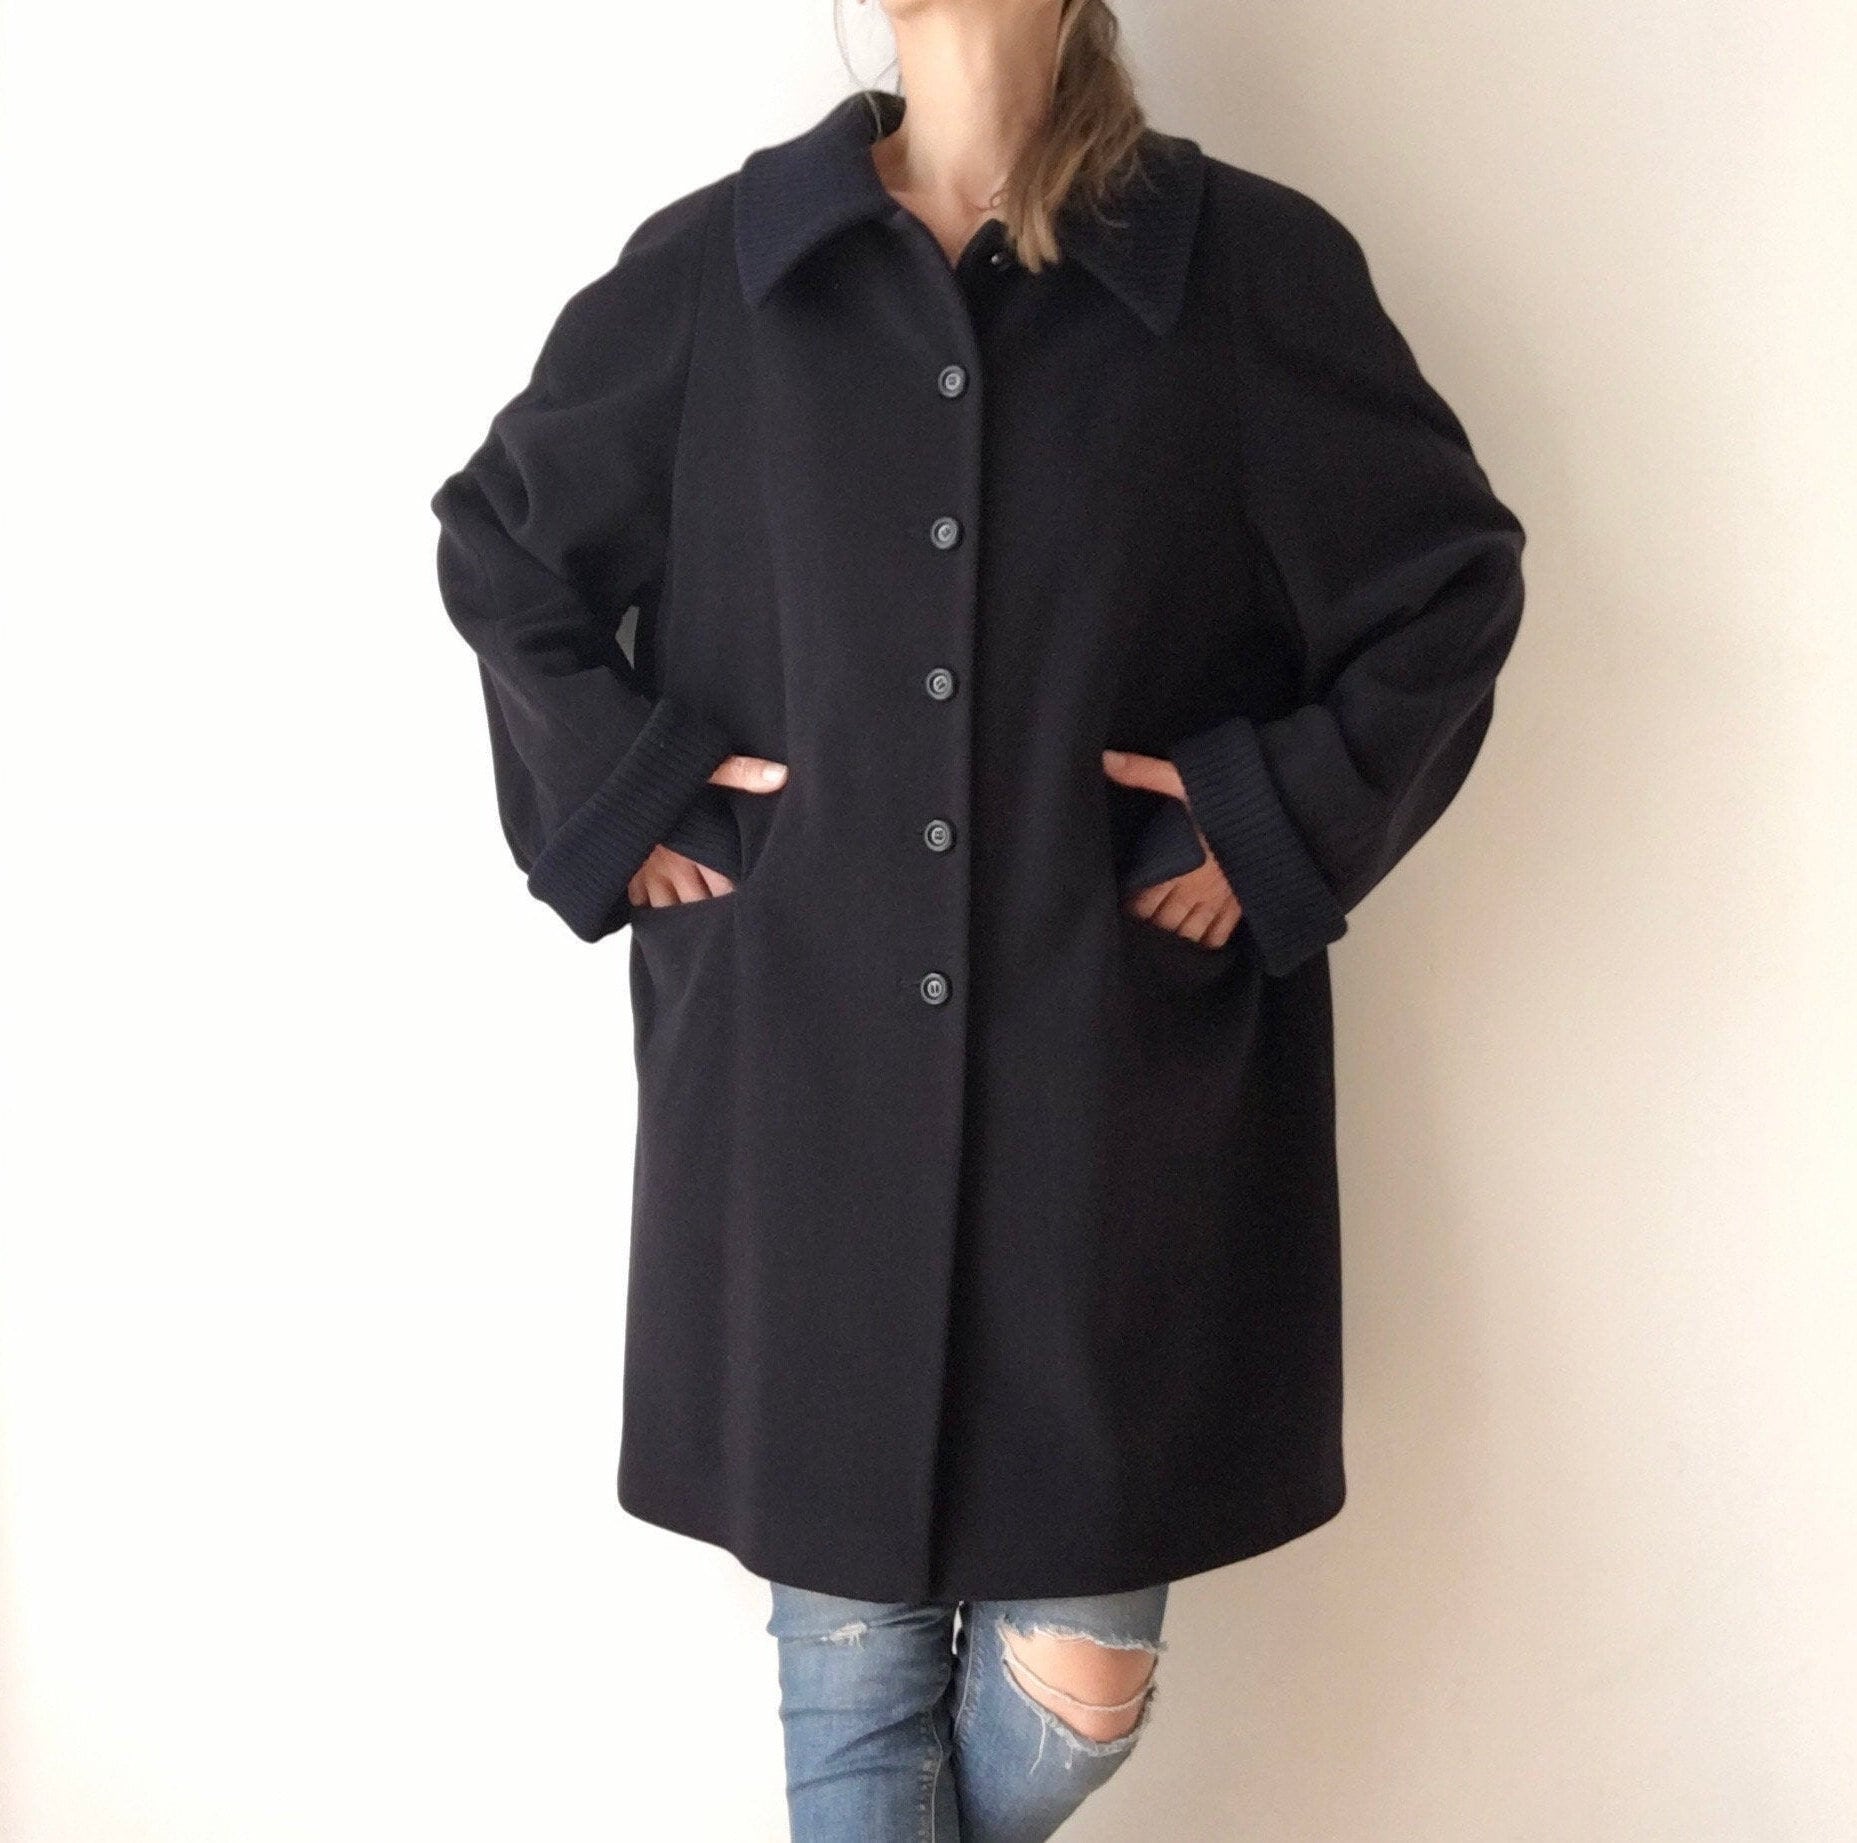 Vintage Wool Blend Coat For Women, Warm Winter Coat, Buttoned Navy Blue Overcoat